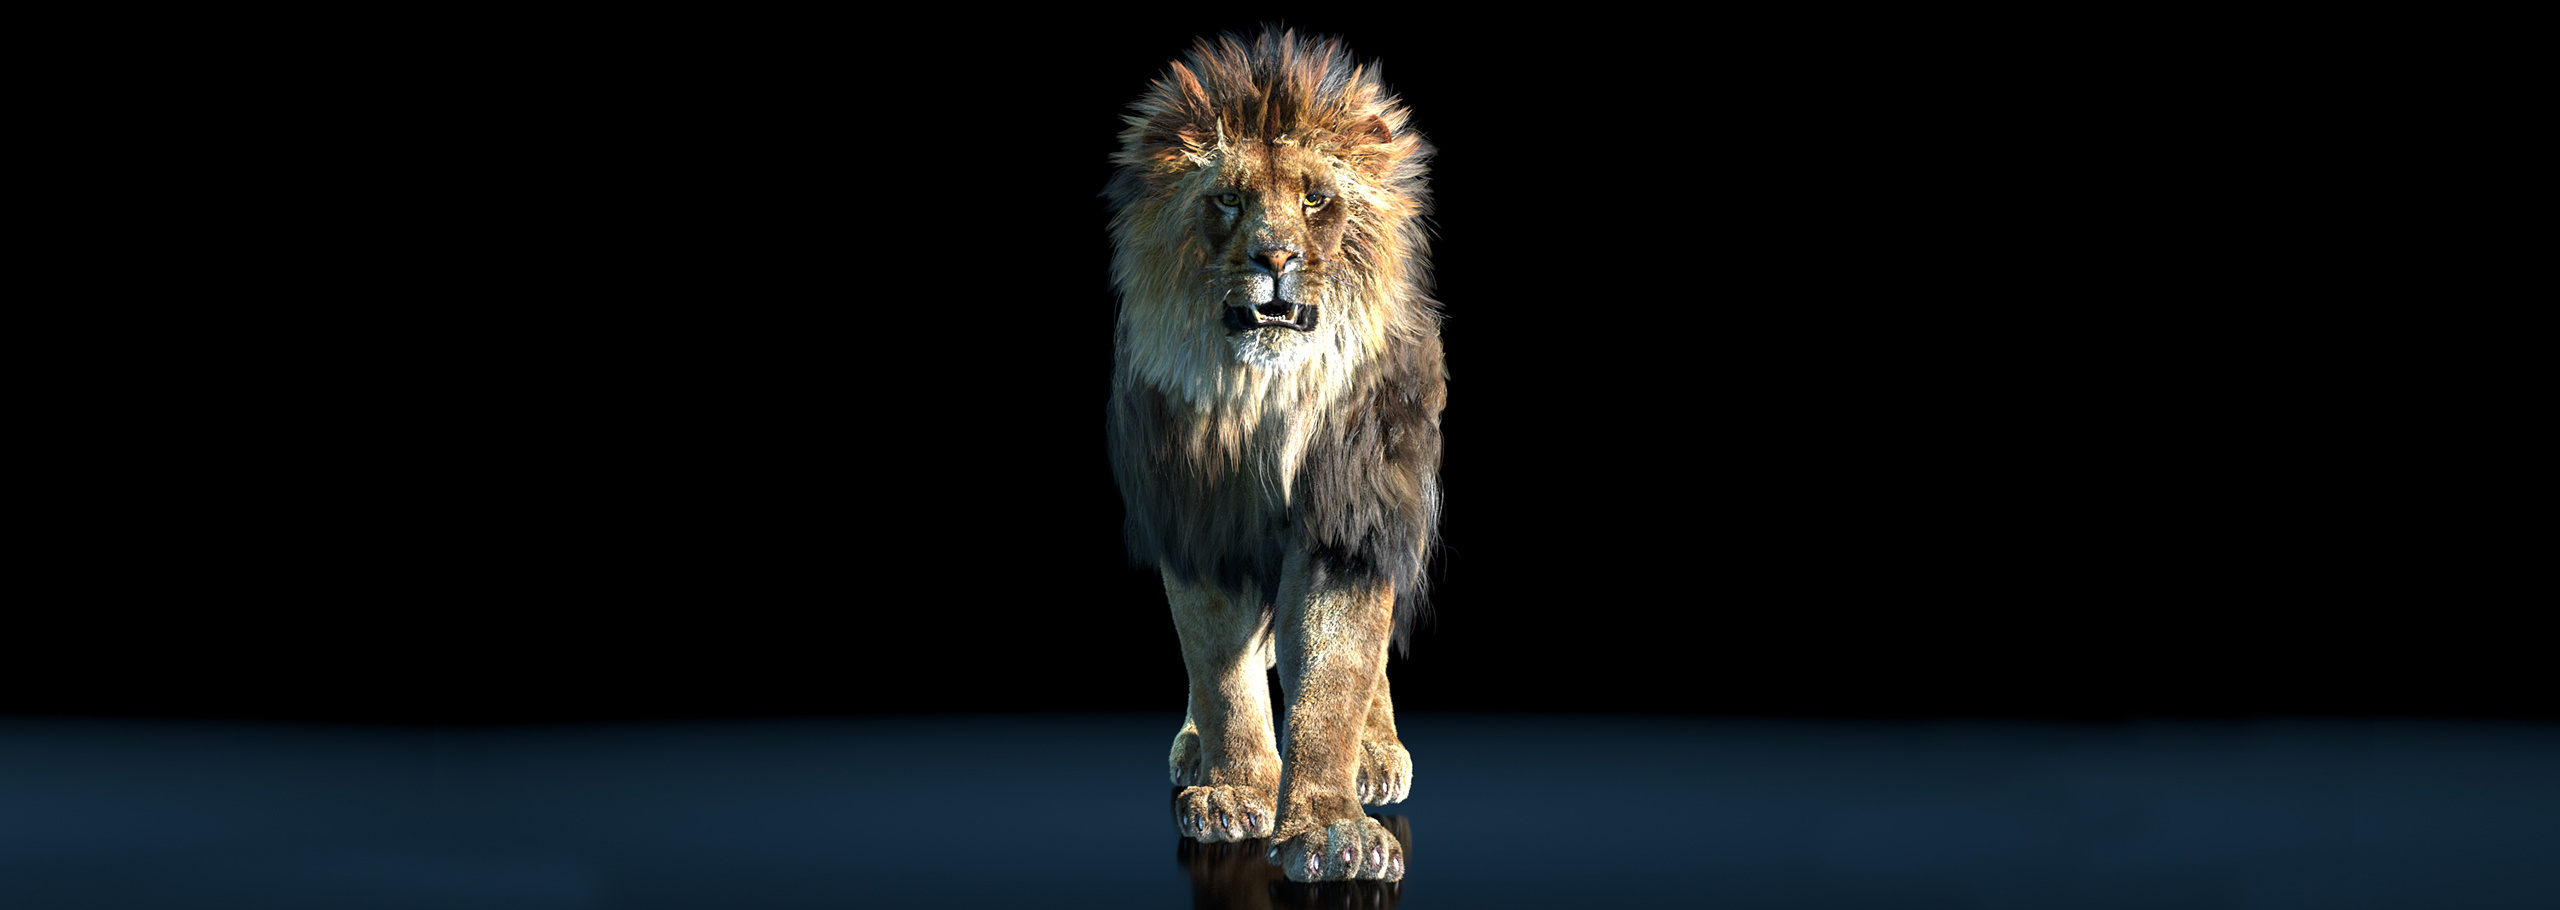 Animated Lion 3D Model